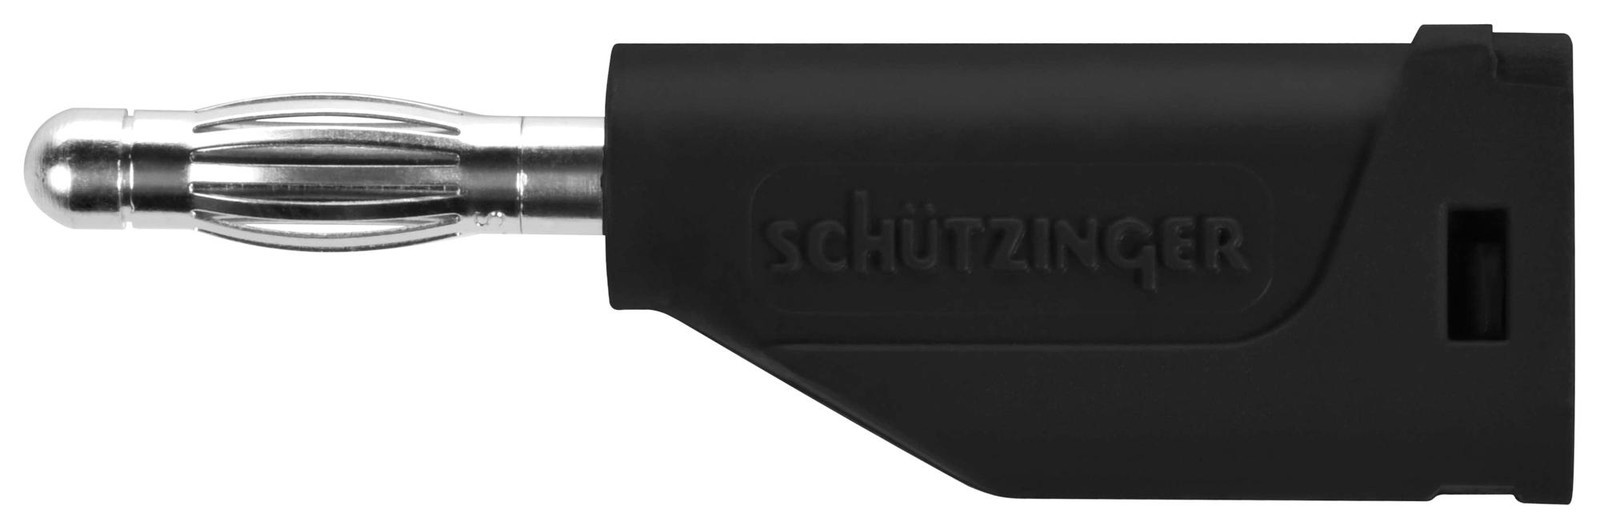 Schutzinger Fk 15 S NI / 2.5 / Sw Connector, Banana, Plug, 32A, Black, Screw